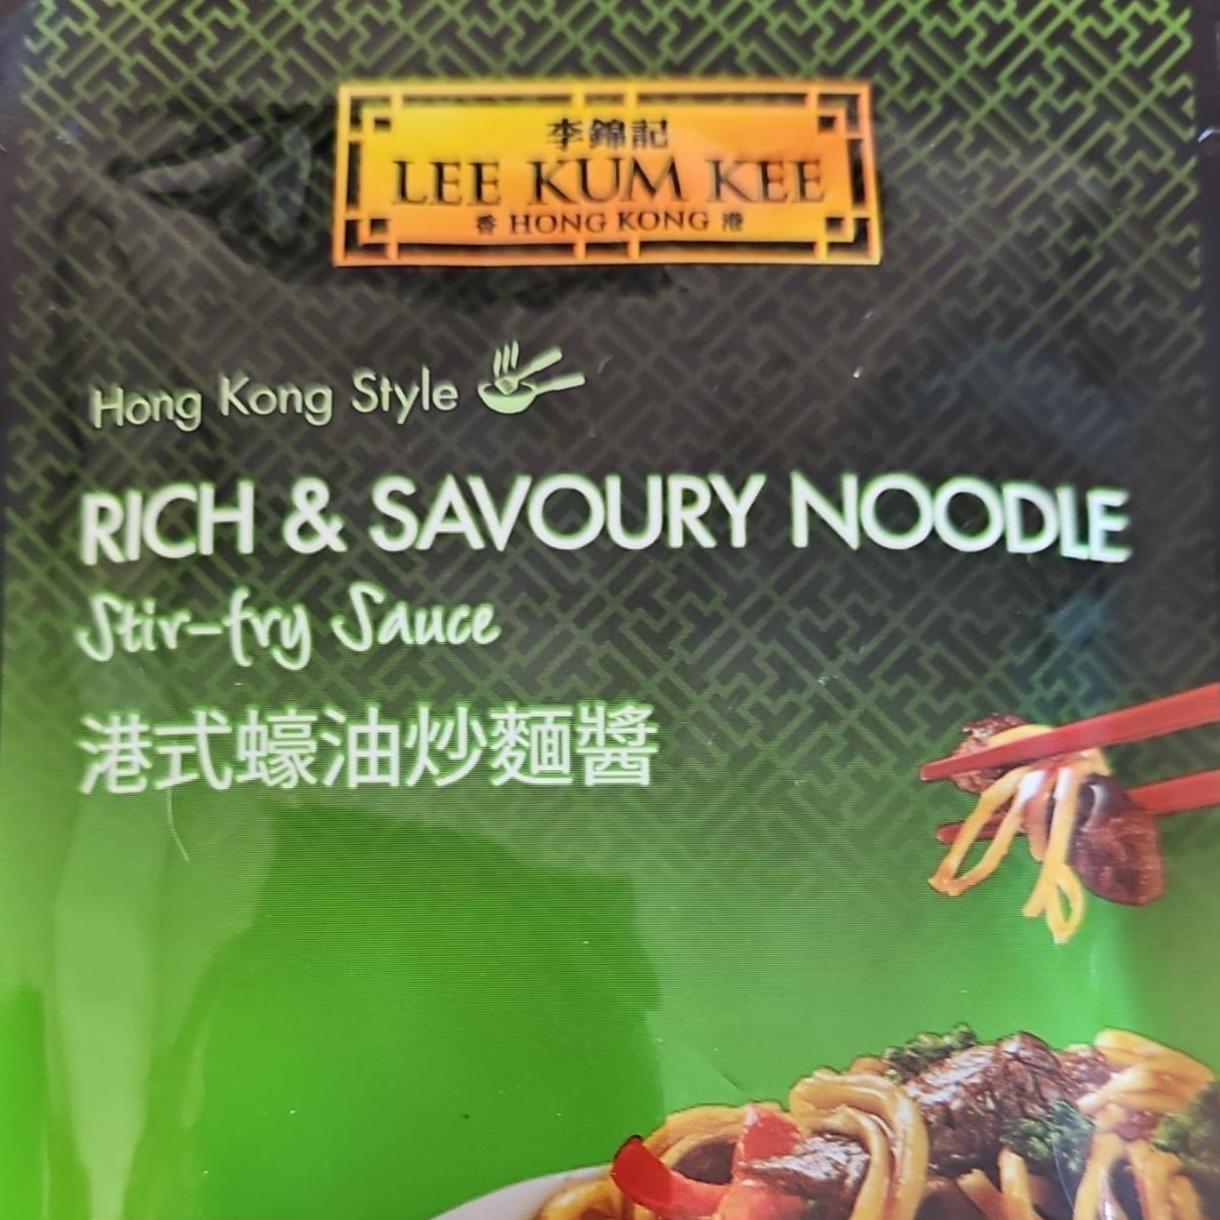 Fotografie - Rich & savoury noodle stir-fry sauce Lee Kum Kee